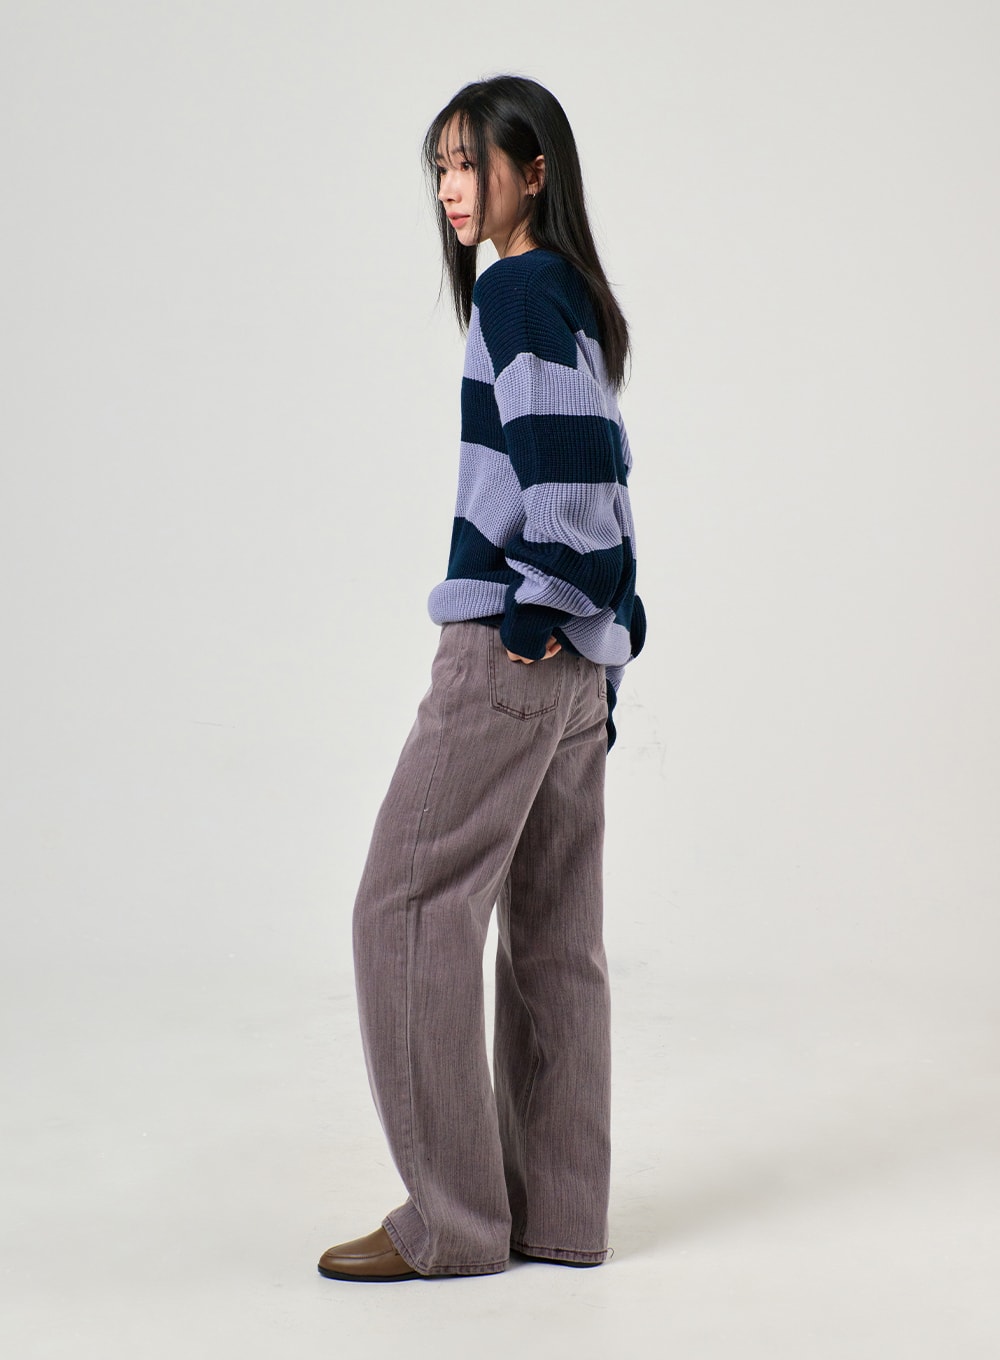 grey knit sweater striped shirt corduroy pants